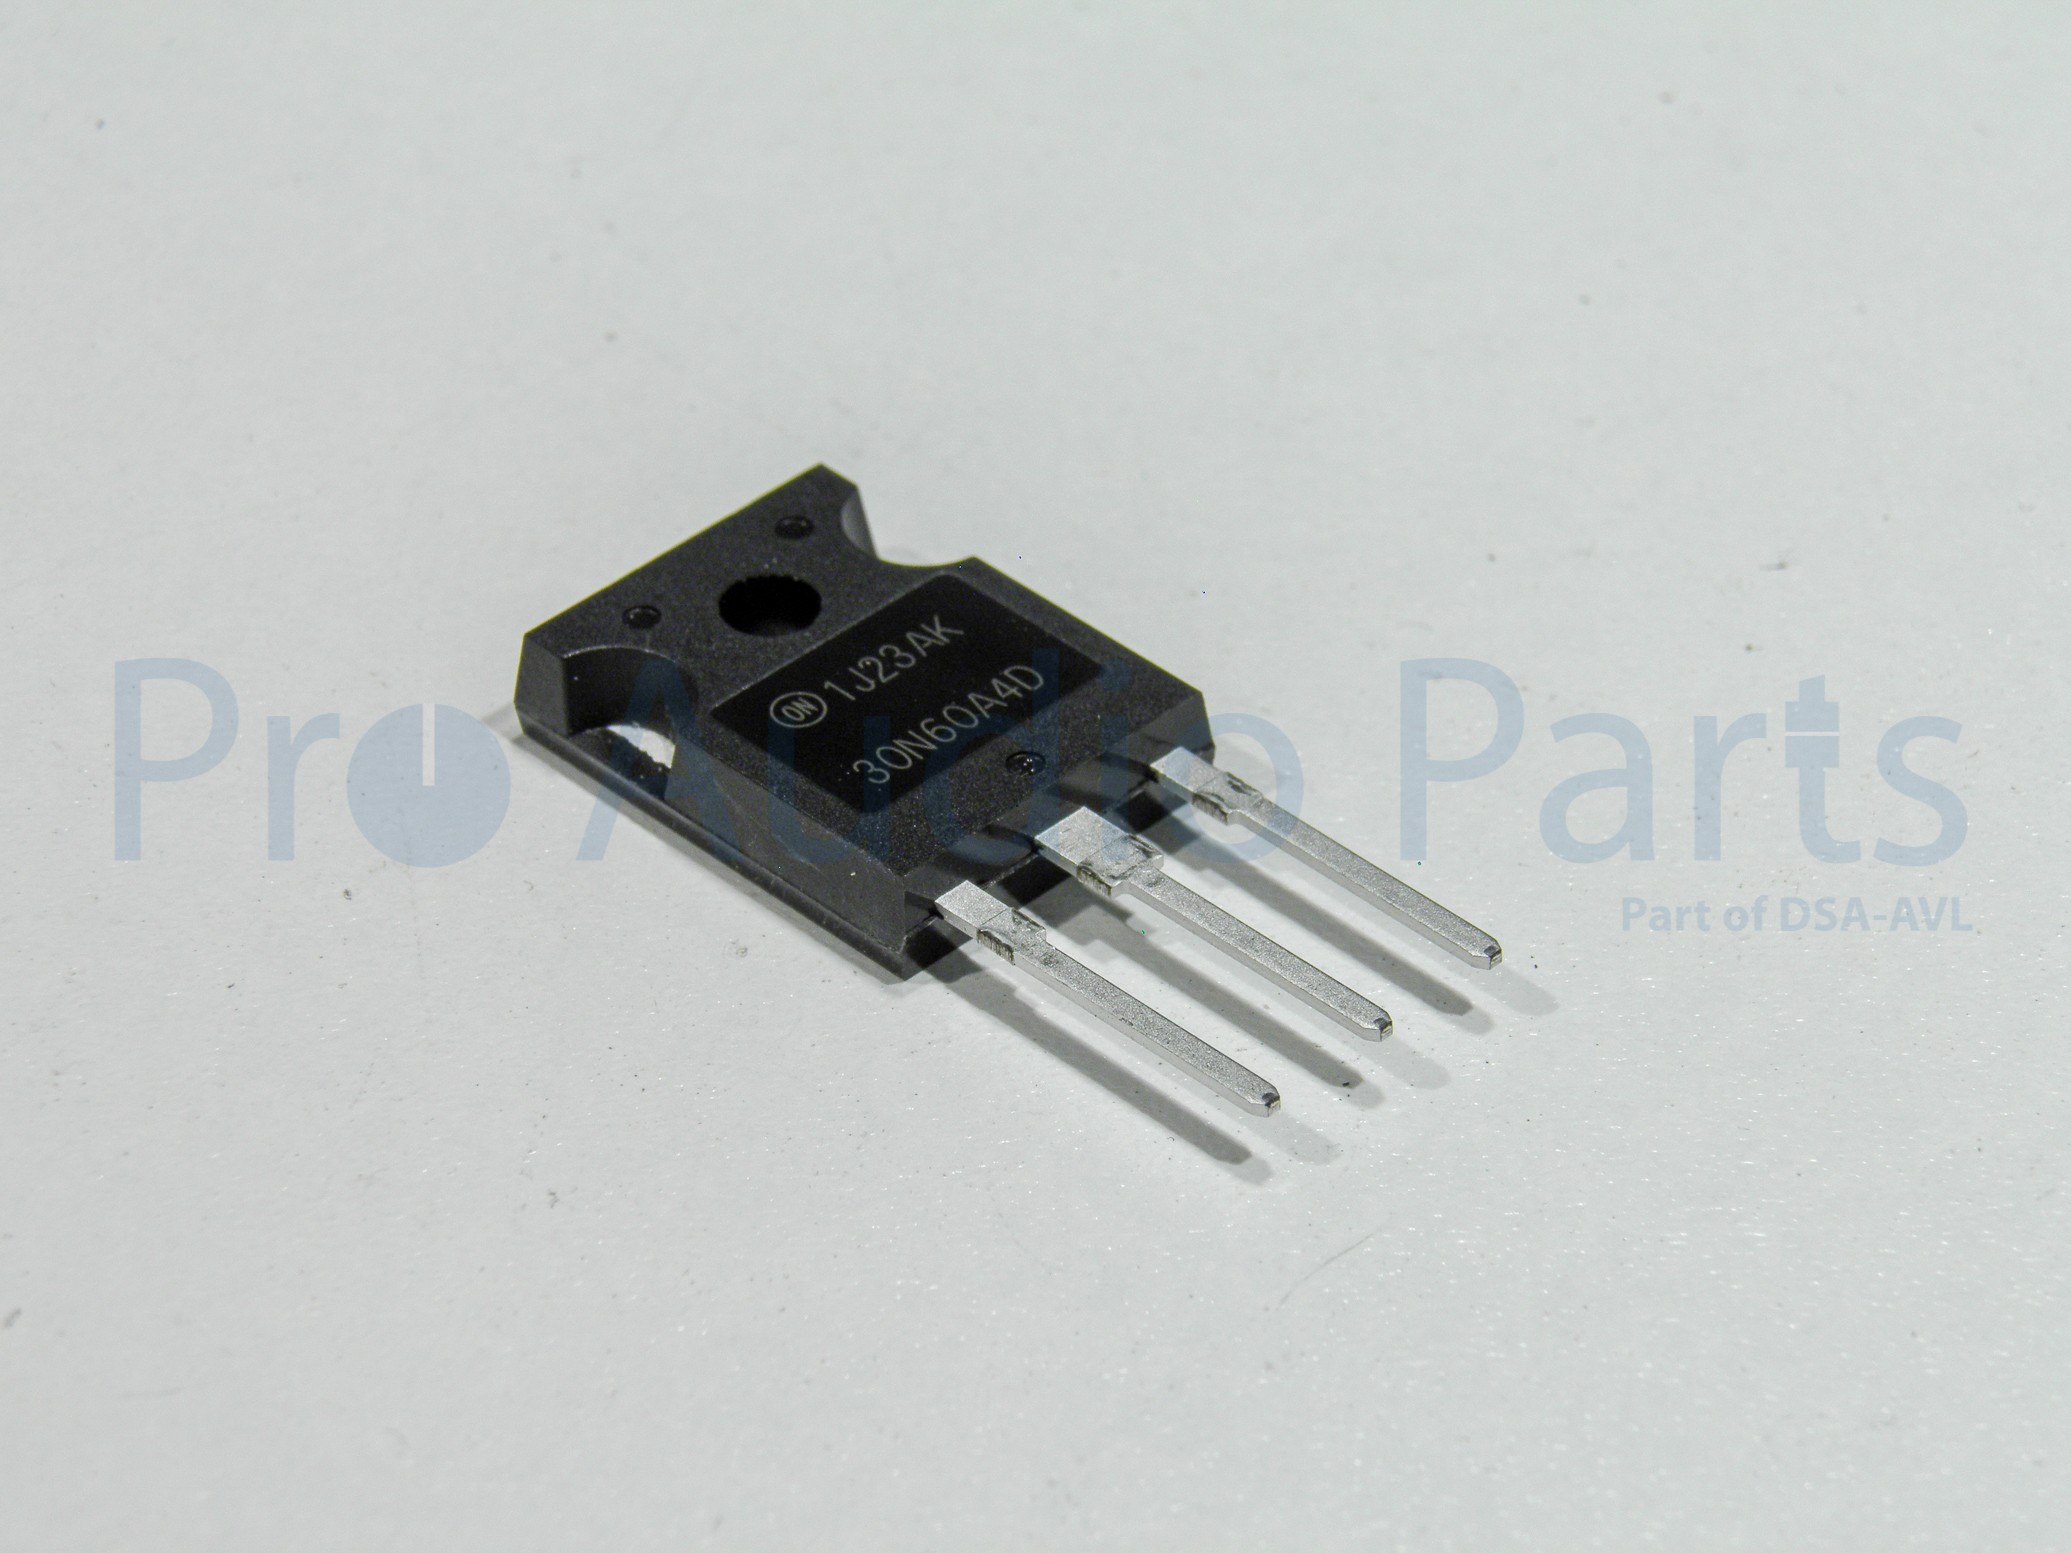 HGTG30N60A4D Transistor IGBT single 600V 75A o.a. Crown CDi1000, CDi2000, CDi4000, CDi6000, DSi2000, DSi4000, DSi6000, XTi2000, XTi2002, XTi4000, XTi4002, XTi6000, XTi6002 Crown partcode 139543-1